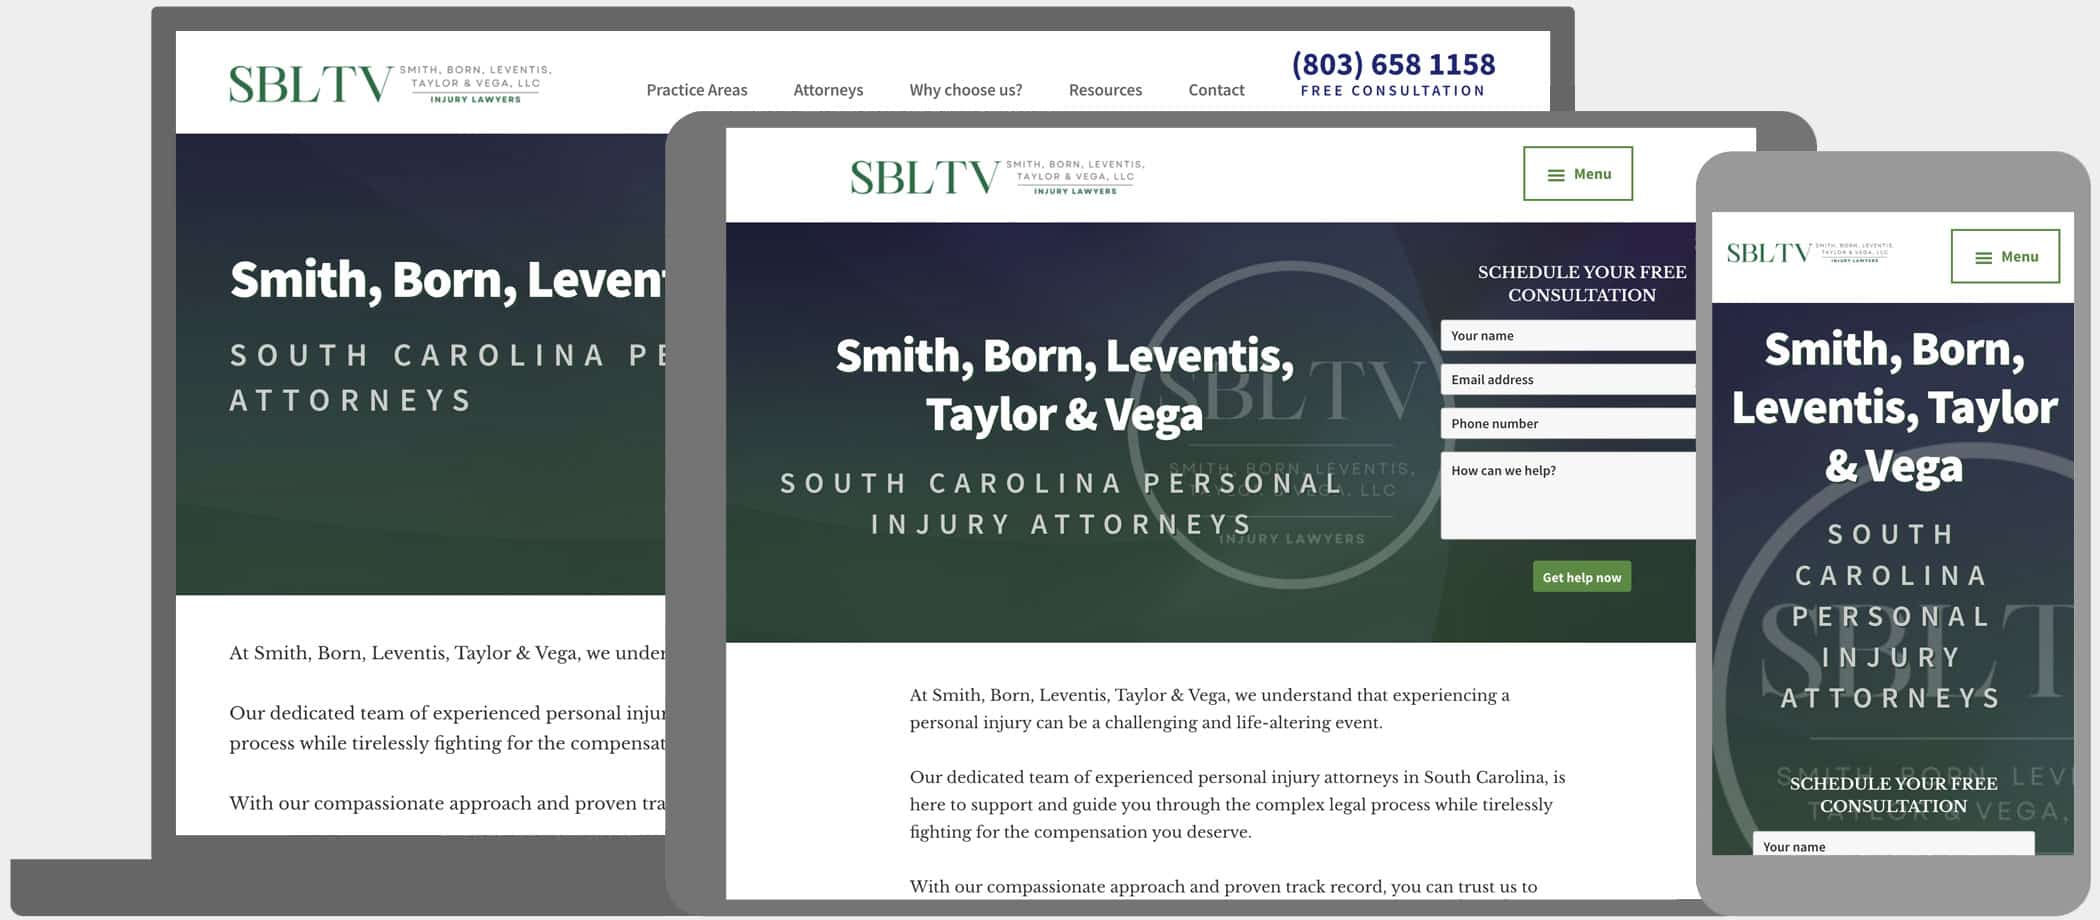 Smith, Born, Leventis, Taylor & Vega, LLC